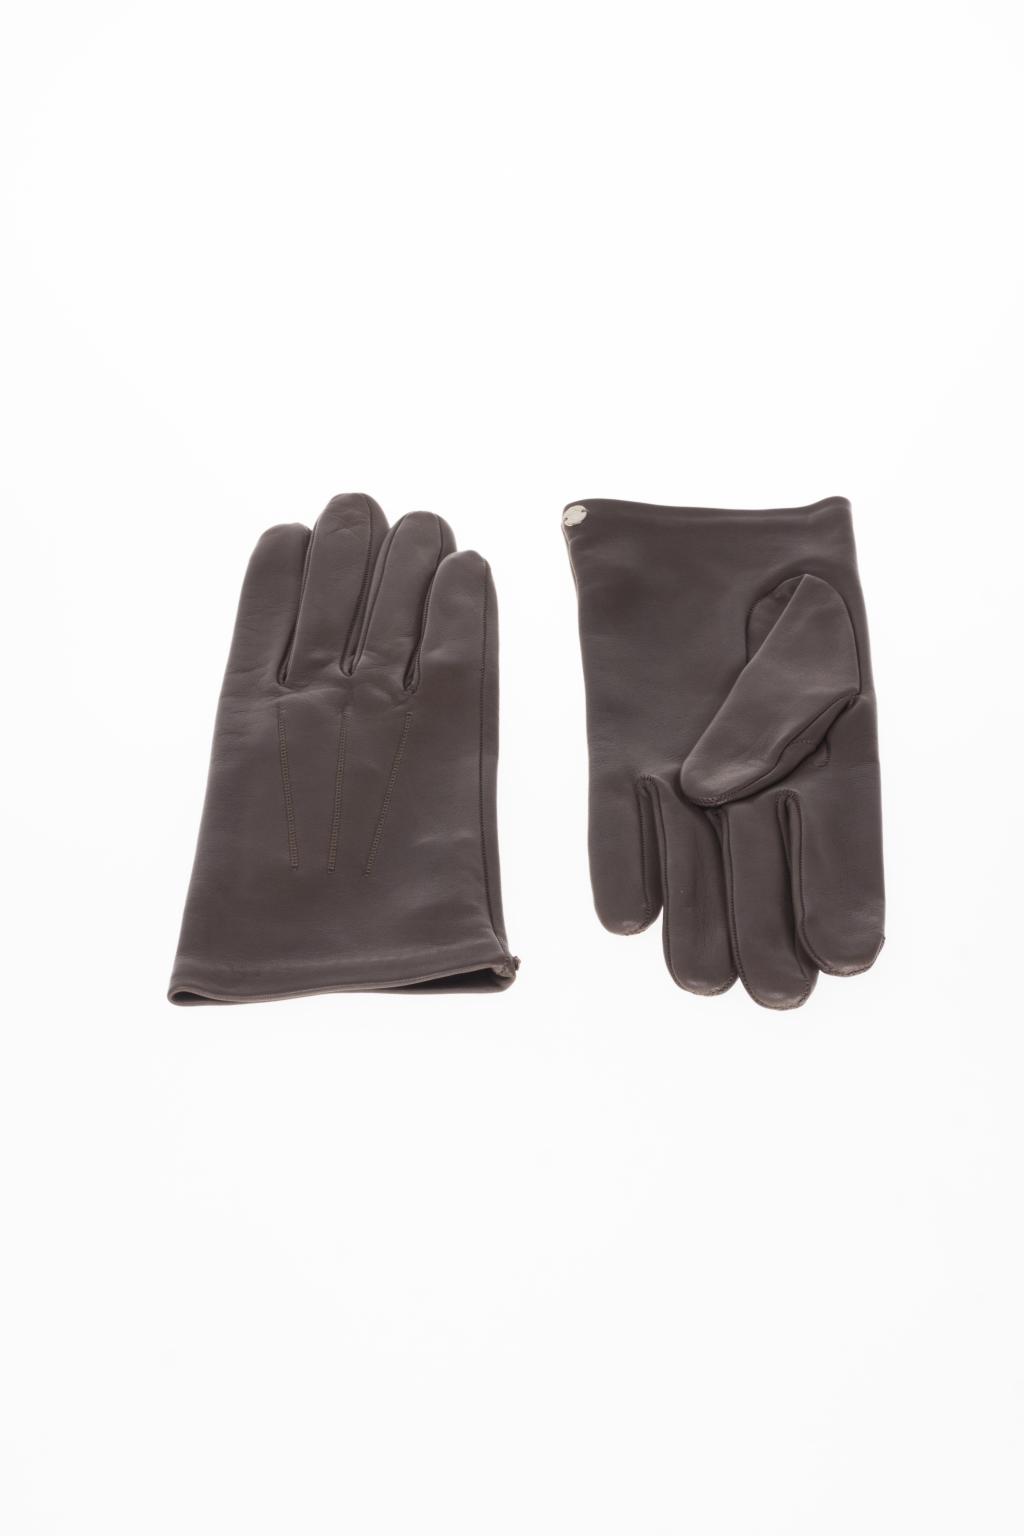 Green Leather Gloves Lanvin - Vitkac Spain